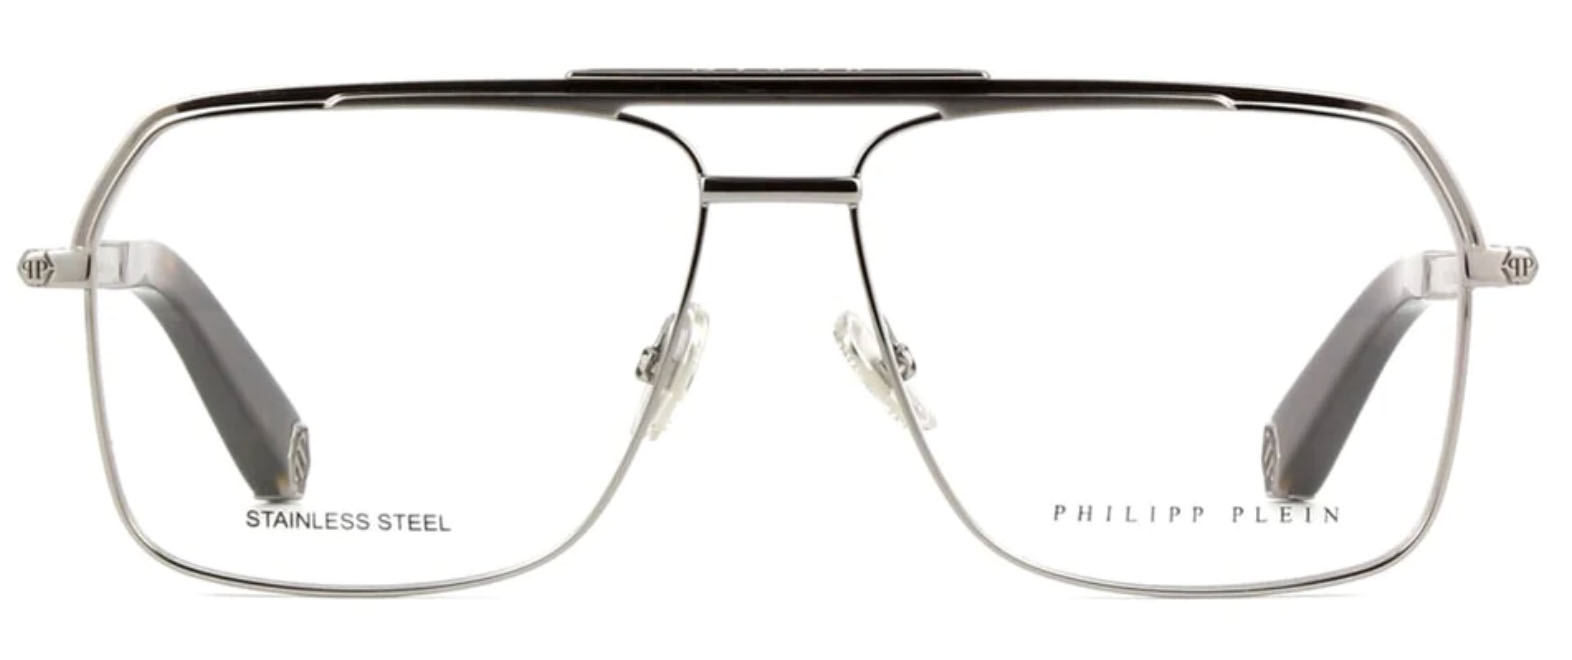 Philipp Plein Aviator Glasses Similar to Those Worn By Hugh Grant